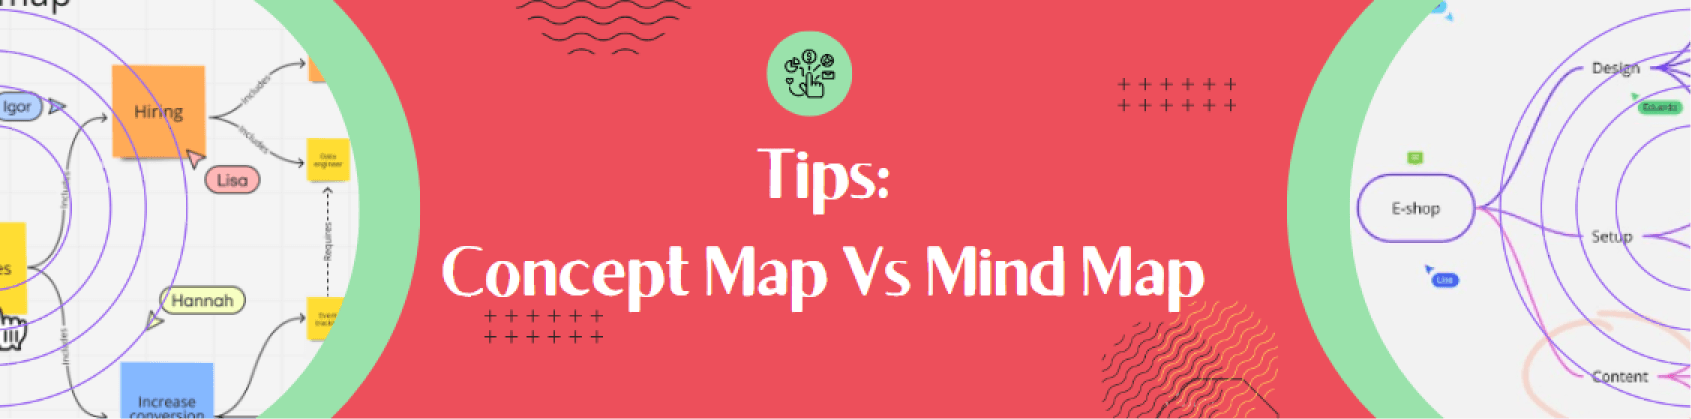 concept map vs mind map